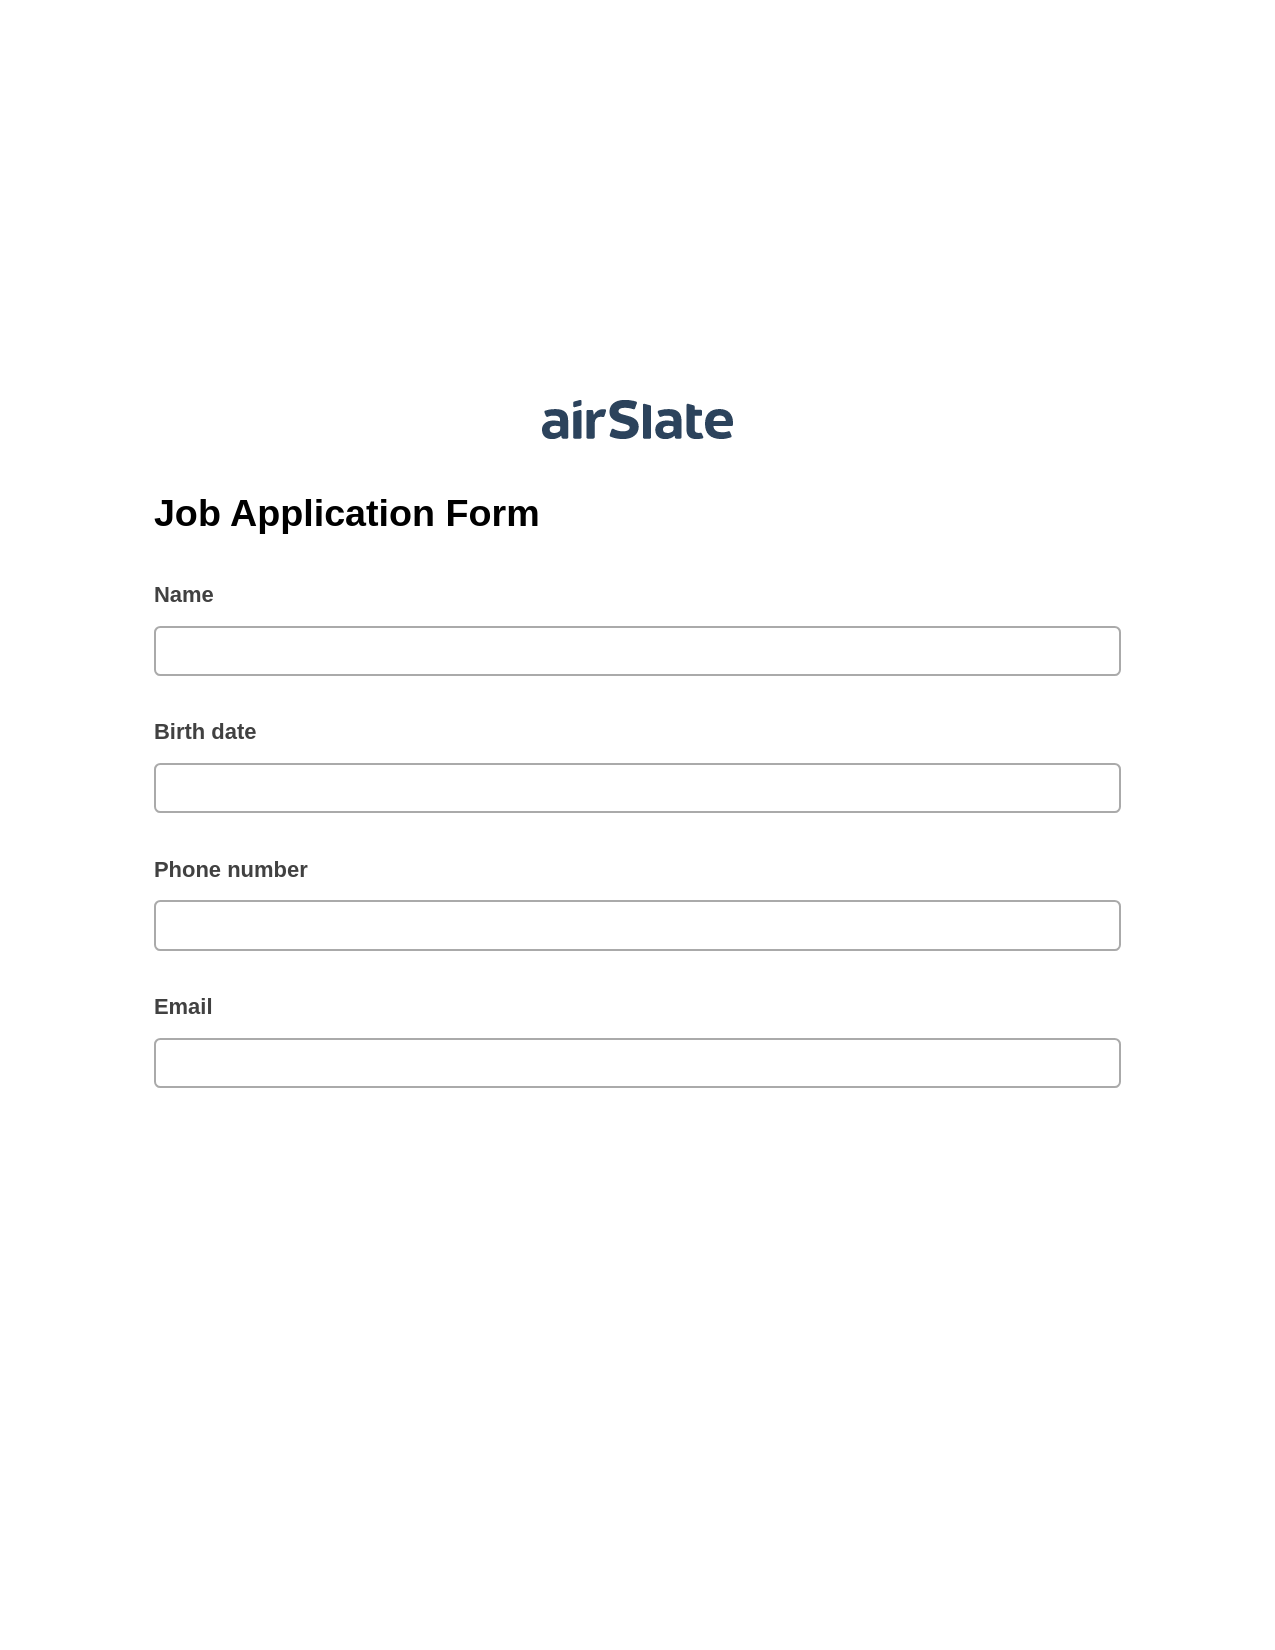 Multirole Job Application Form Pre-fill from Google Sheet Dropdown Options Bot, Remove Slate Bot, Export to Smartsheet